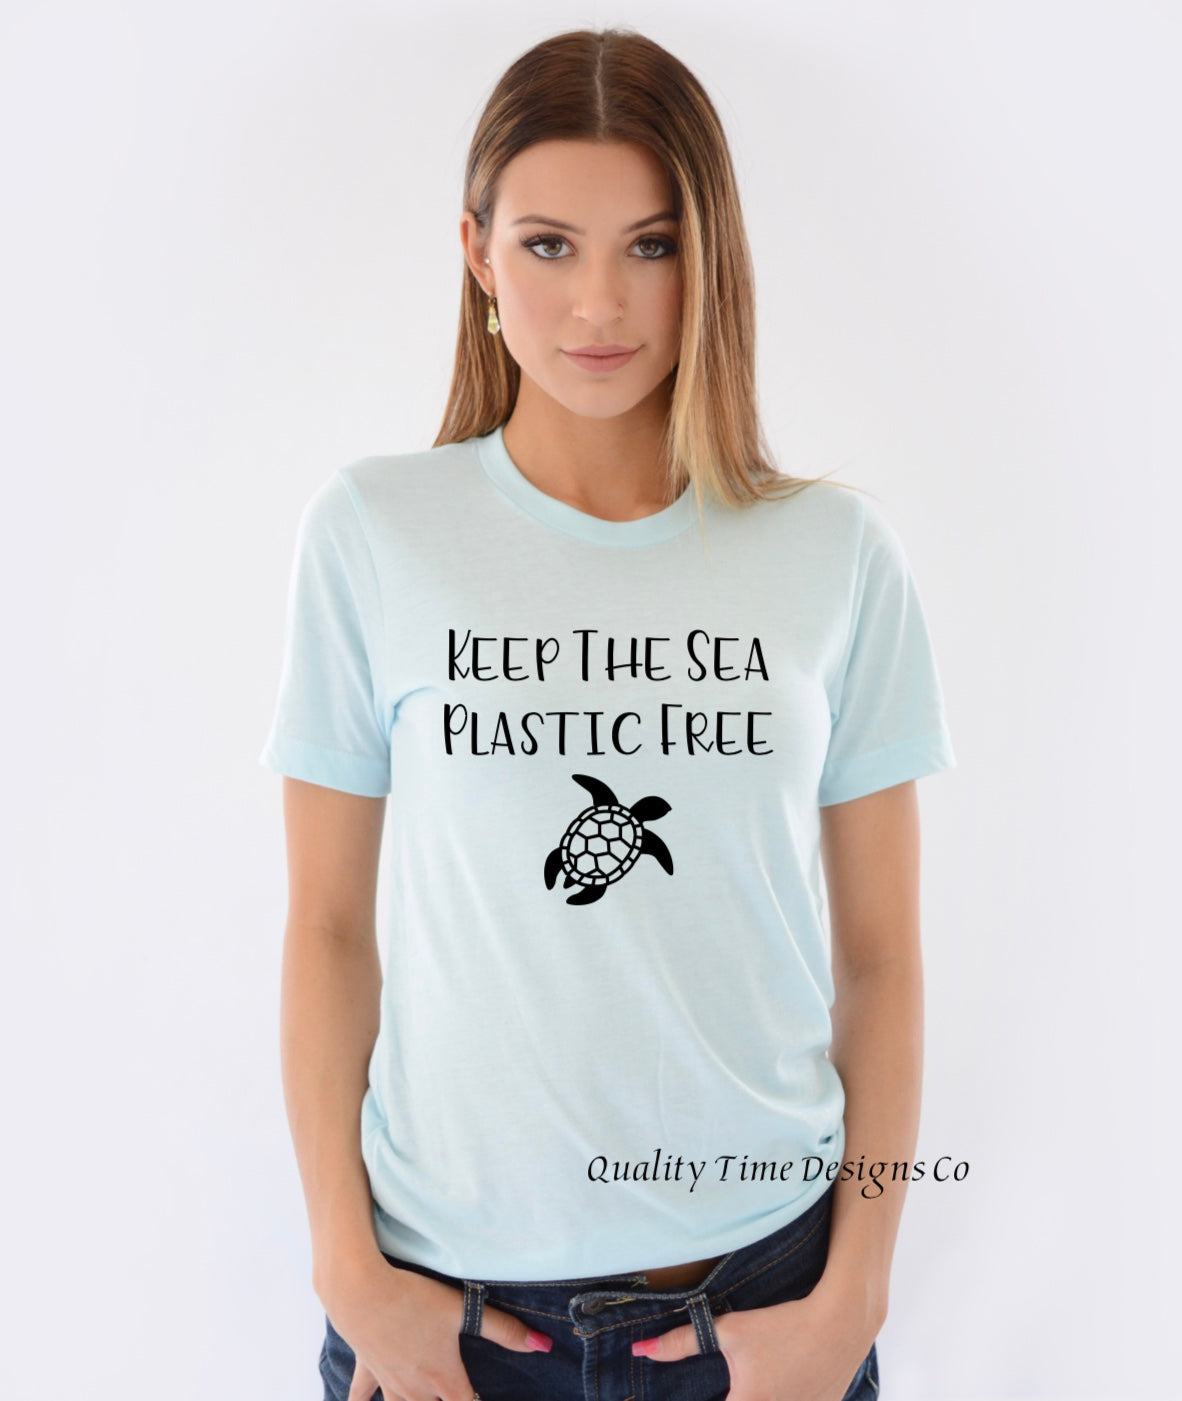 Keep the sea plastic free t-shirt 